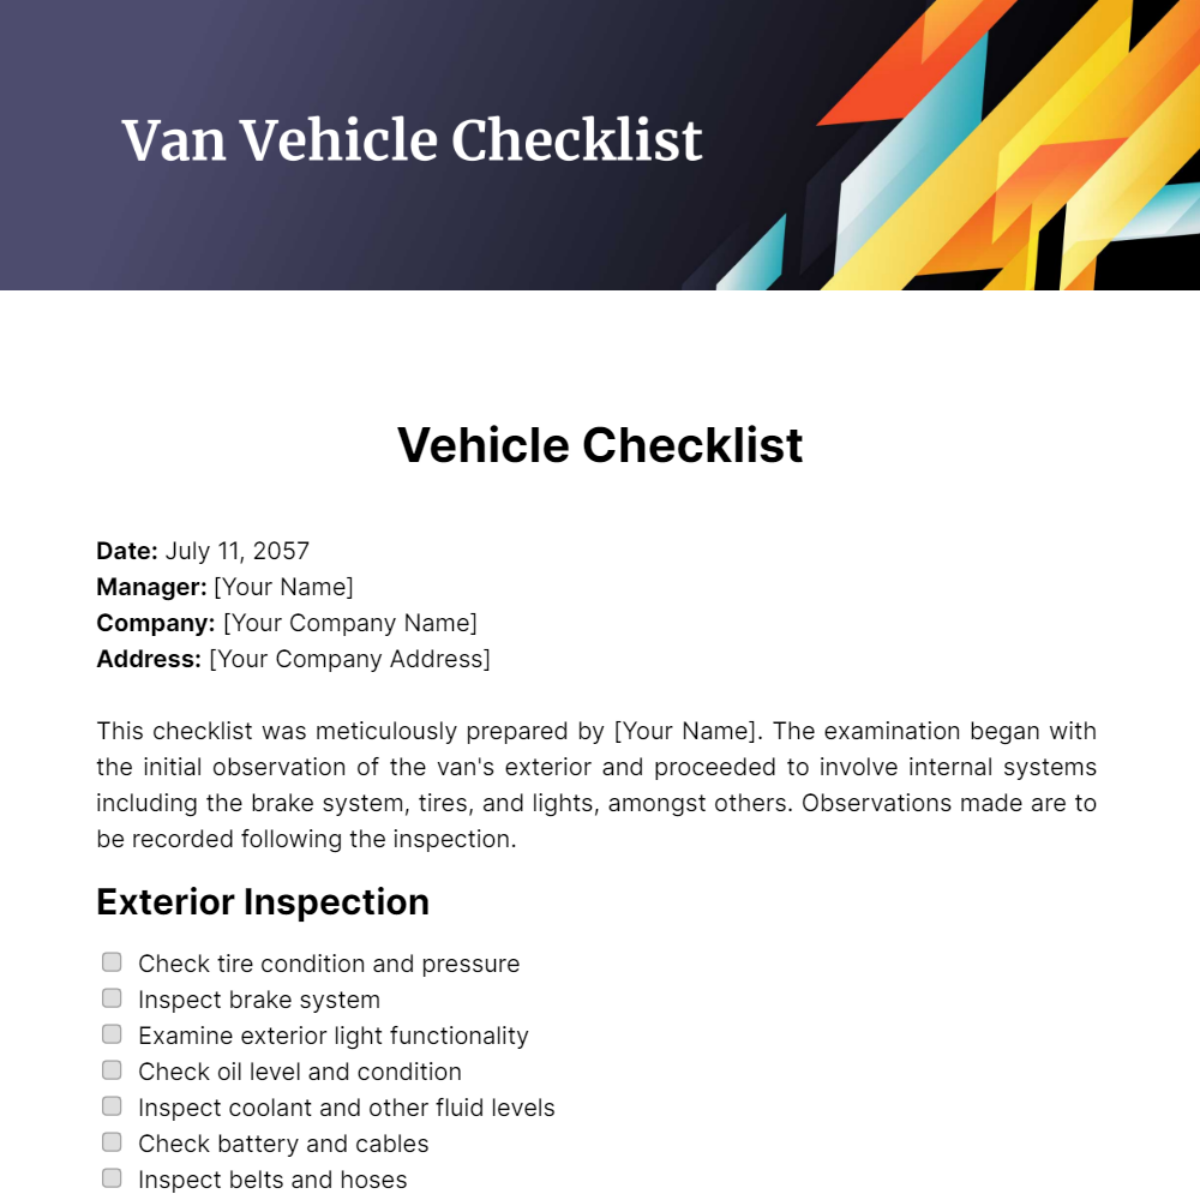 Van Vehicle Checklist Template